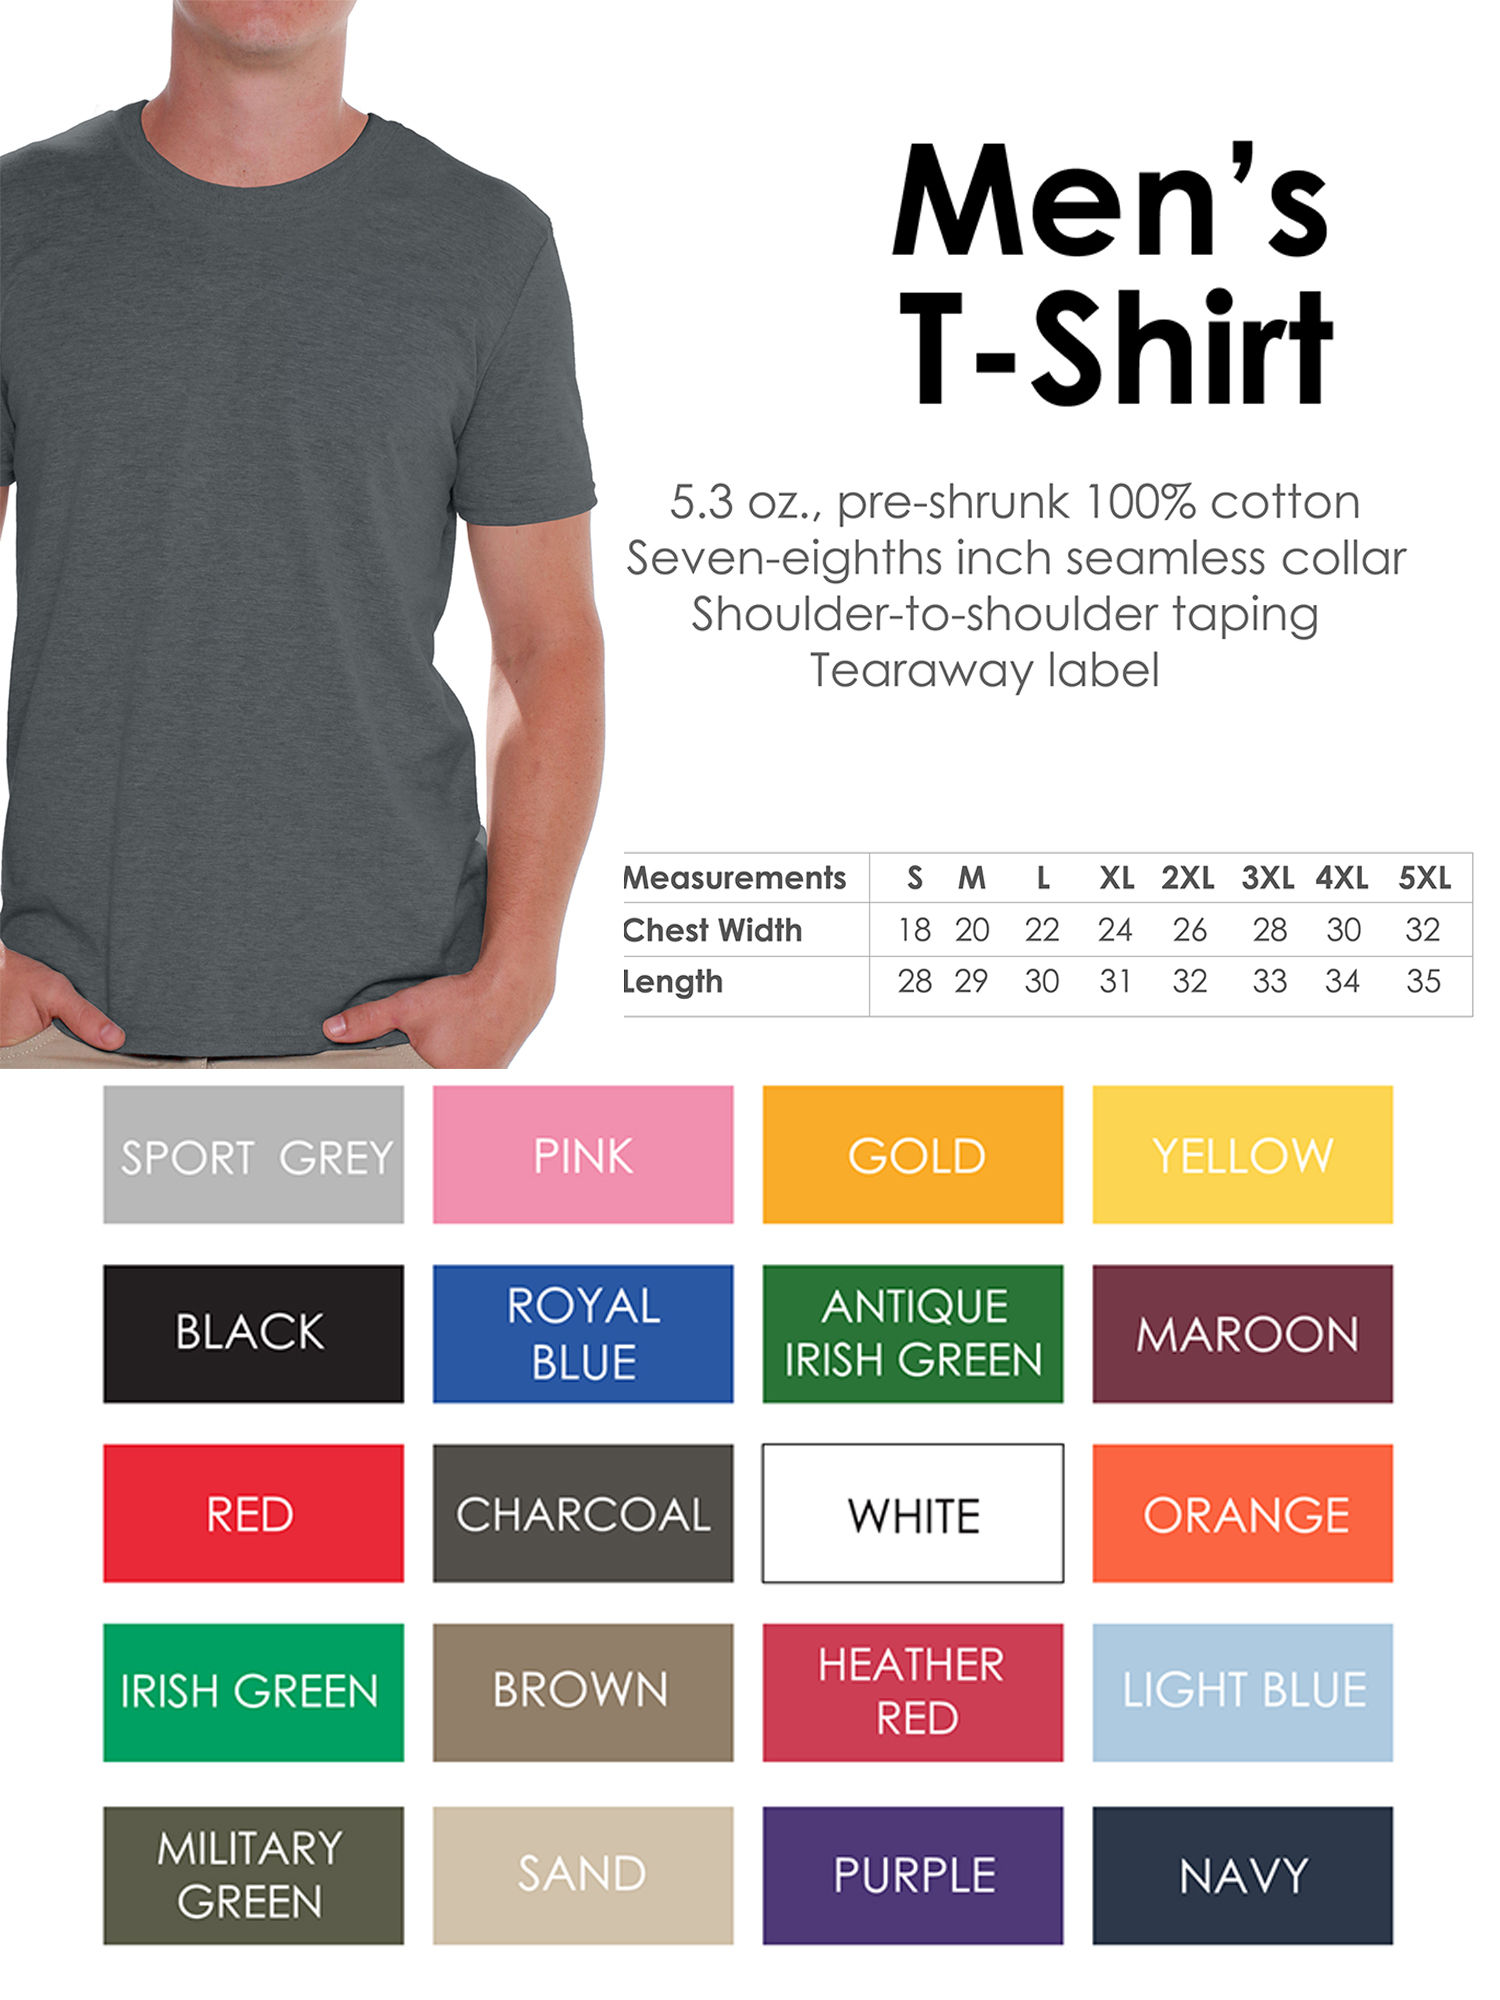 Gildan Shirts for Men Short Sleeve Tshirts Mens Classic Outwear Cotton Men's Shirt Blank Tee Shirts - image 4 of 4